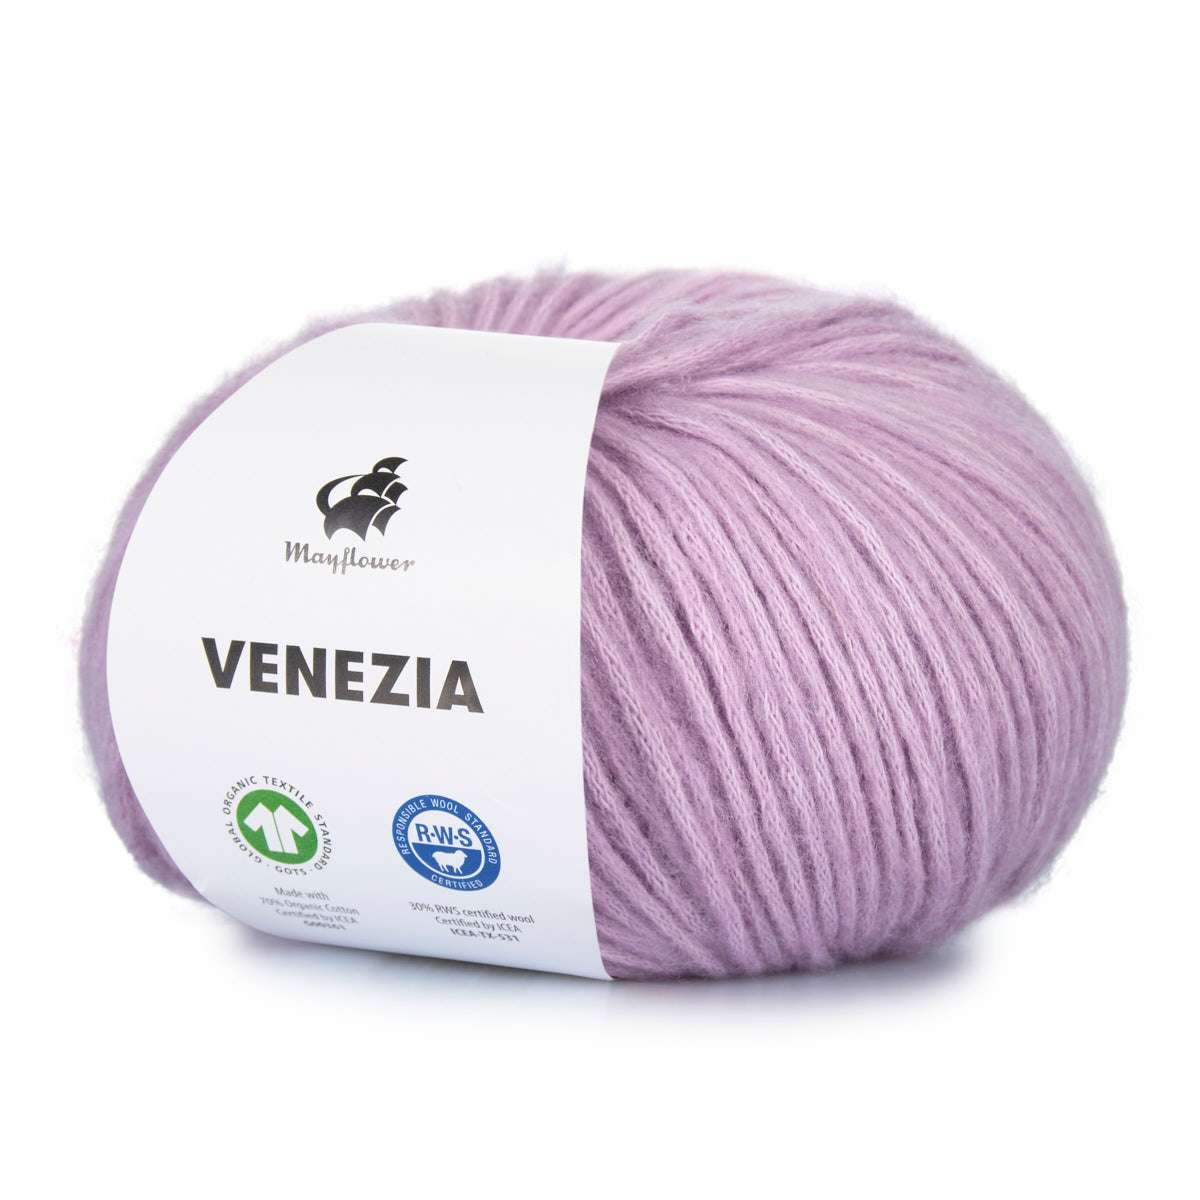 Mayflower Venezia - 31 Pastel lilla